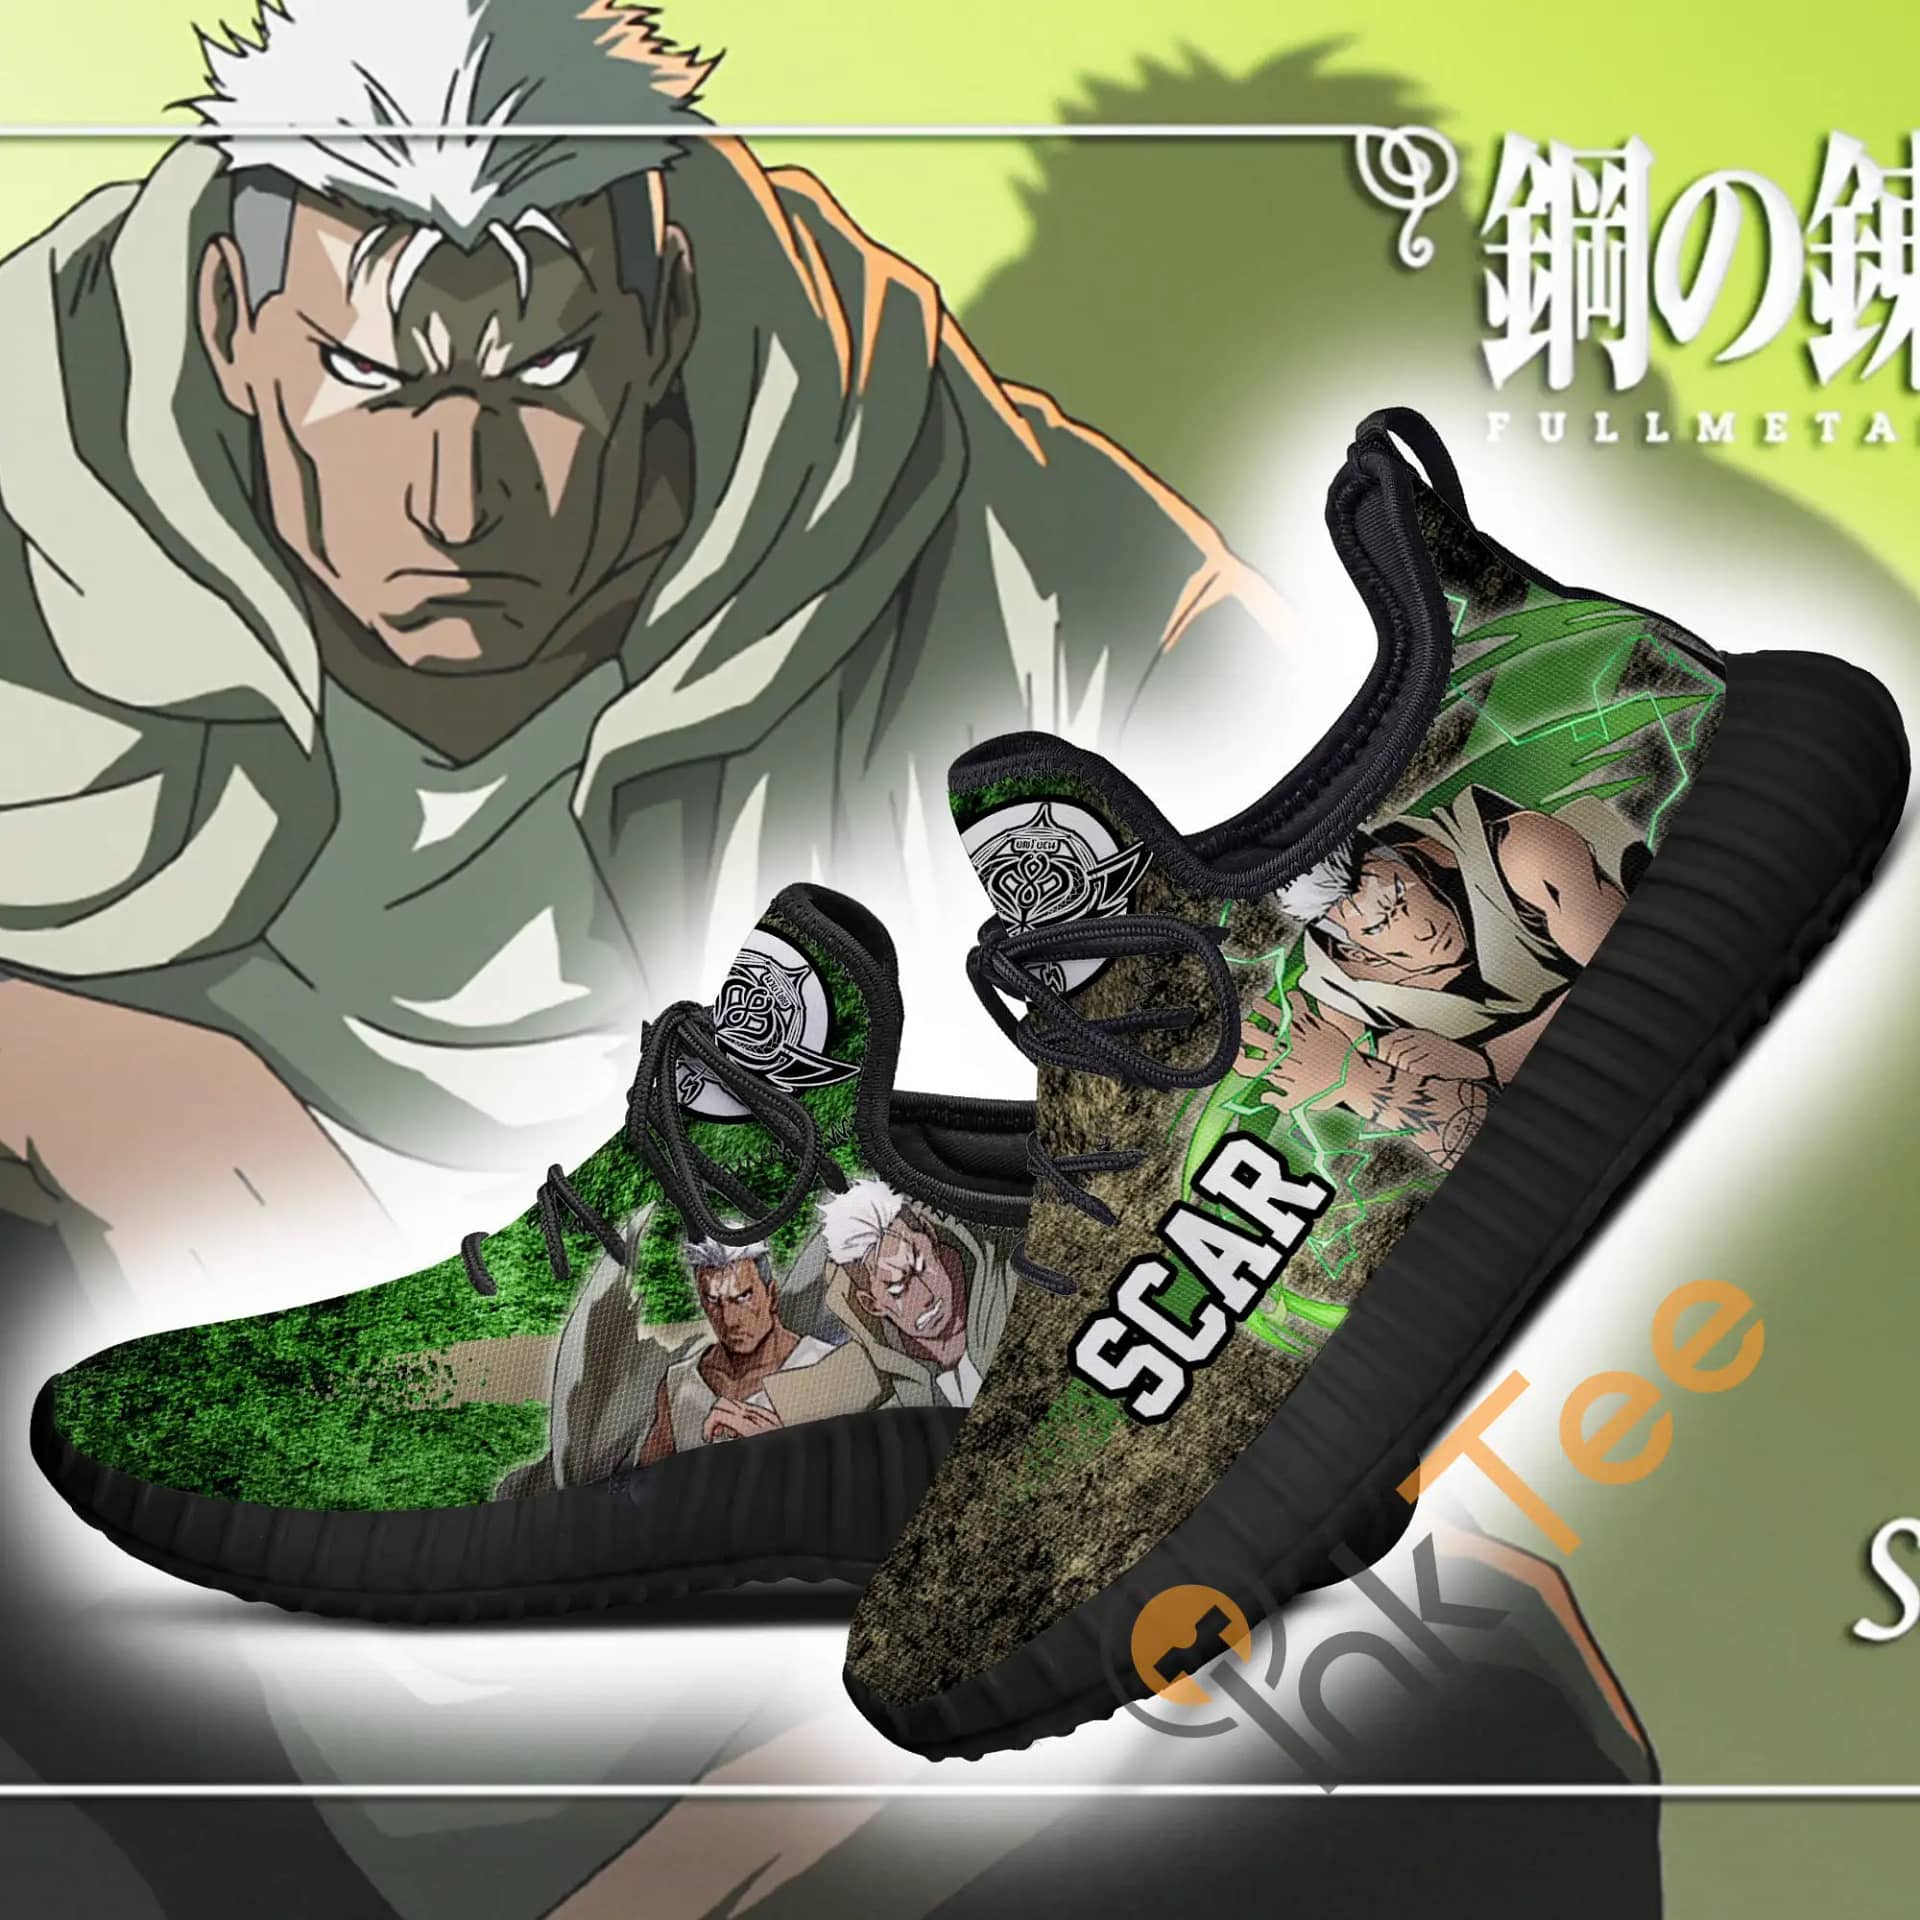 Inktee Store - Fullmetal Alchemist Scar Character Anime Amazon Reze Shoes Image